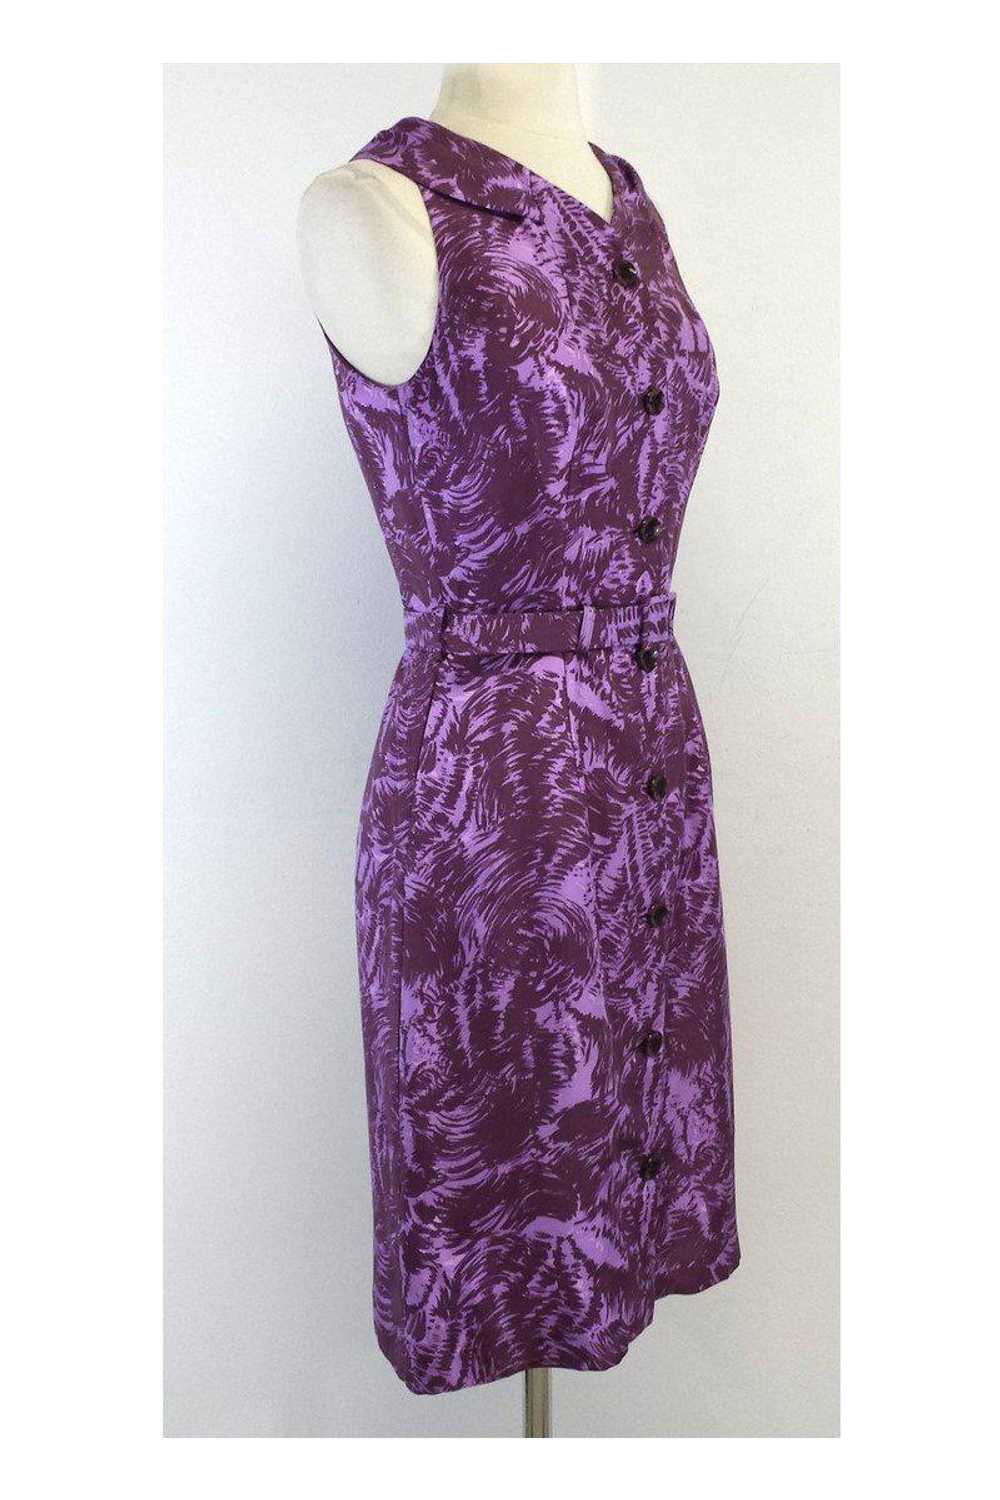 Milly - Purple Print Silk Sleeveless Dress Sz 2 - image 2